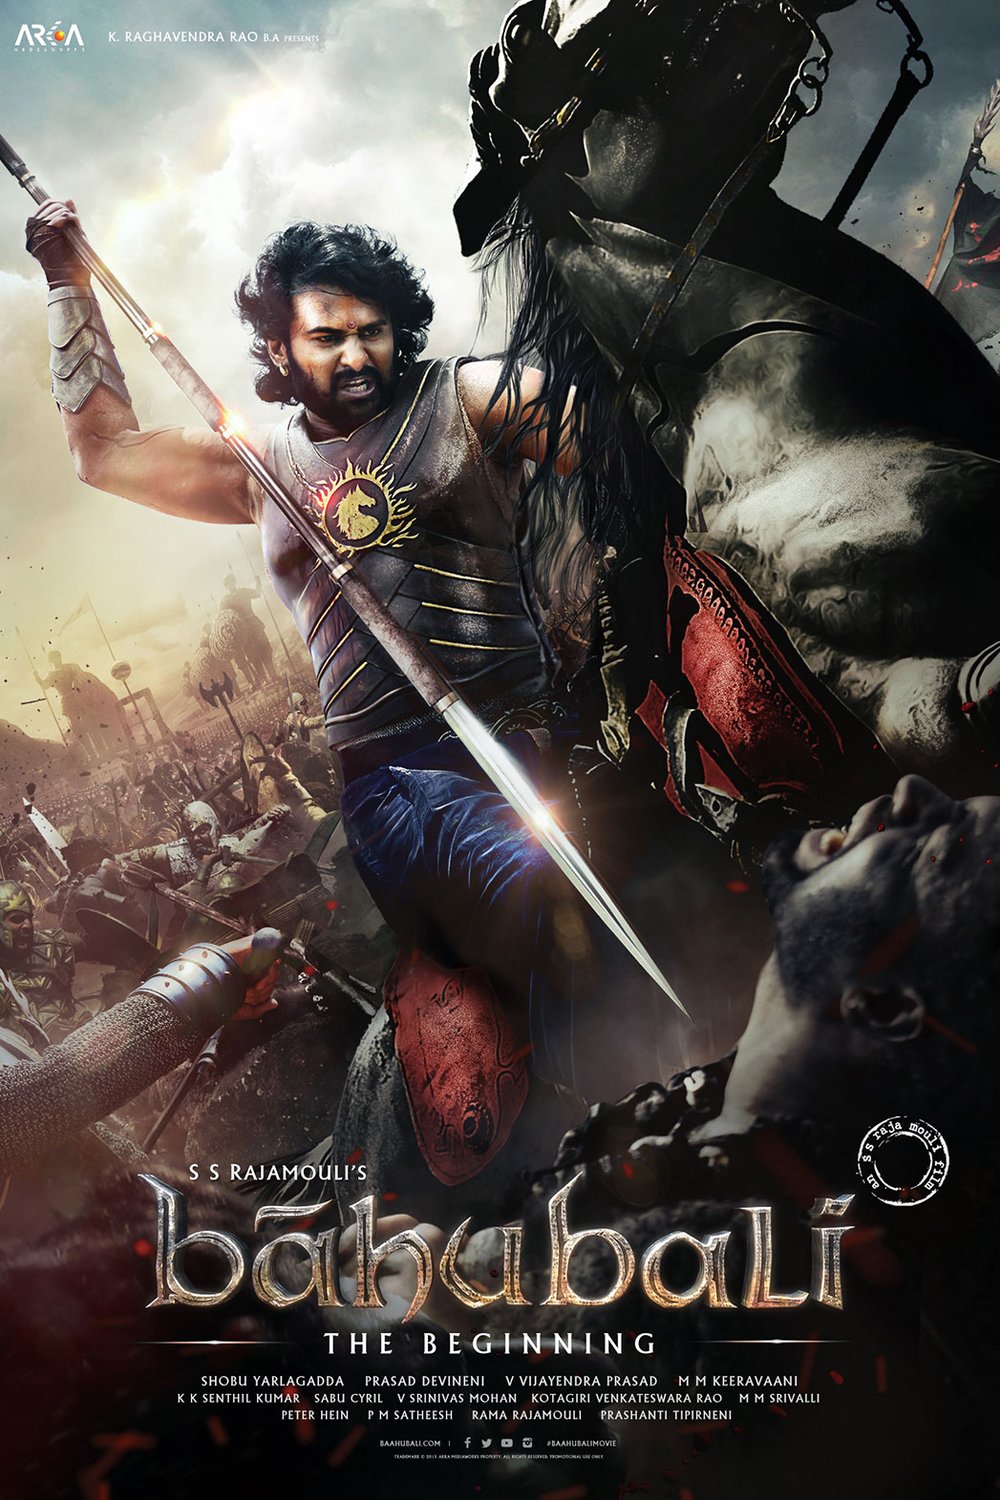 Telugu poster of the movie Baahubali: The Beginning